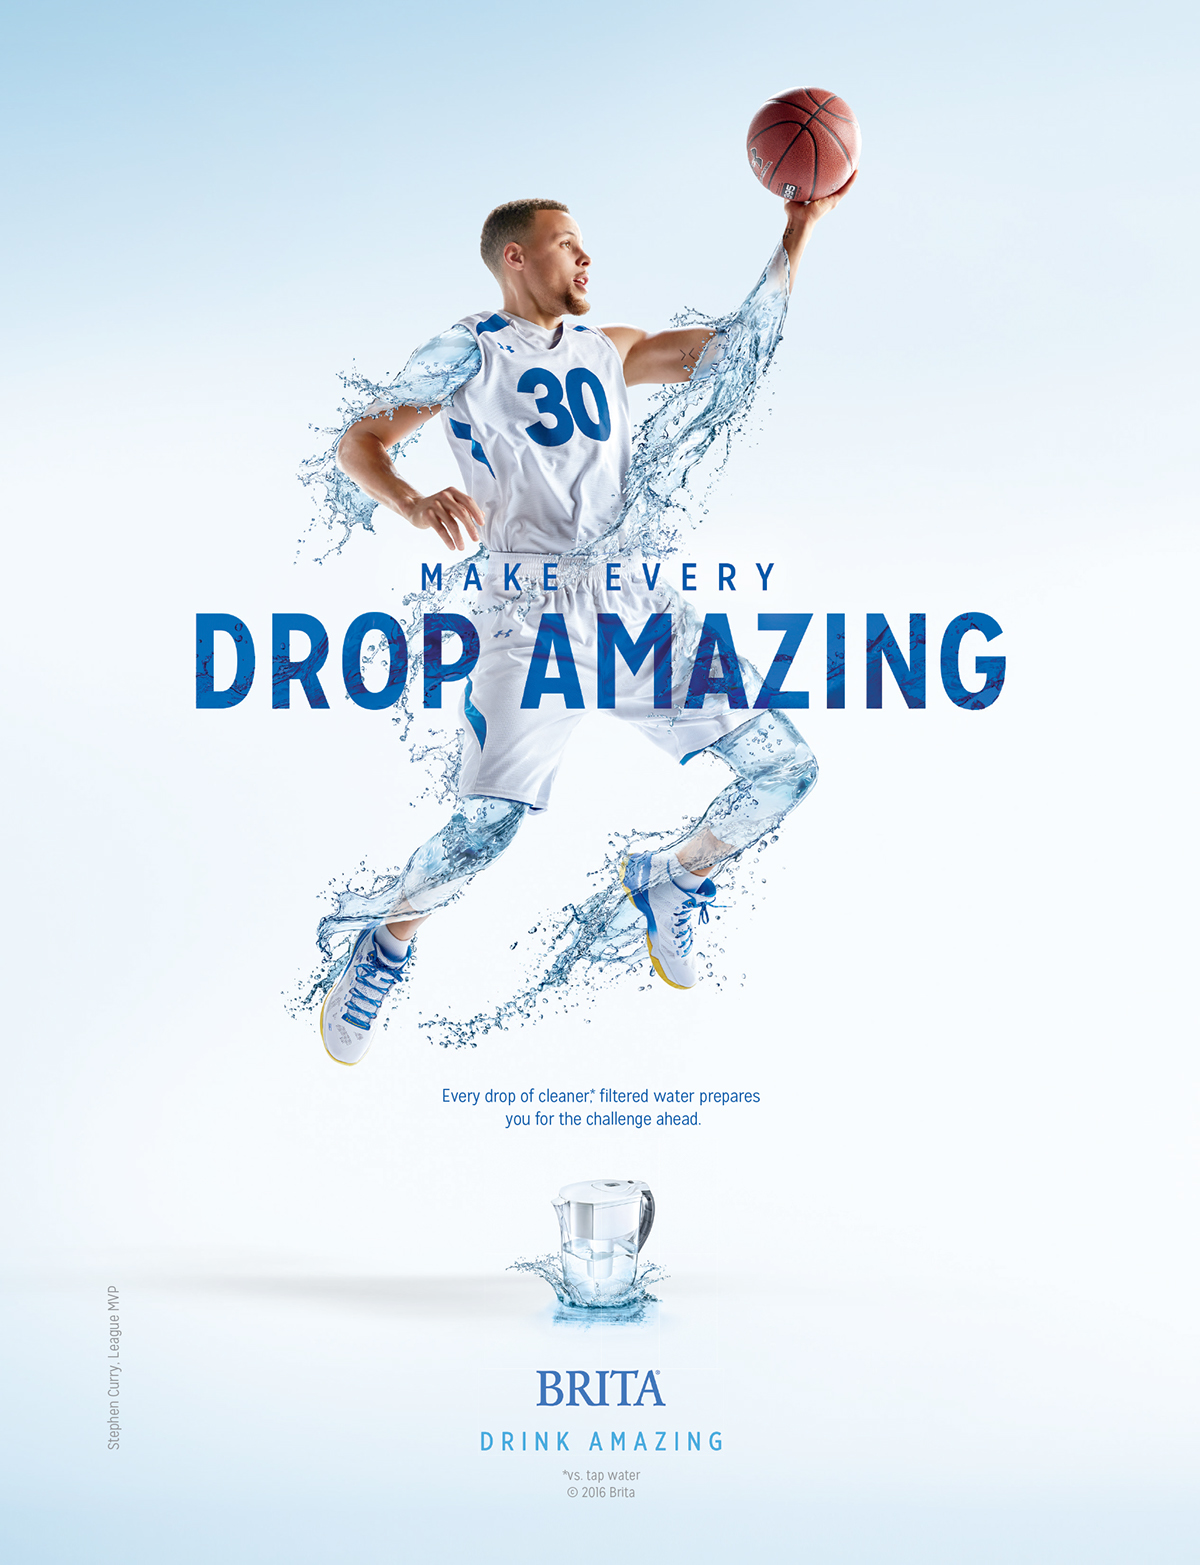 water NBA stephen curry steph curry splash drip drop Liquid basketball mvp all star